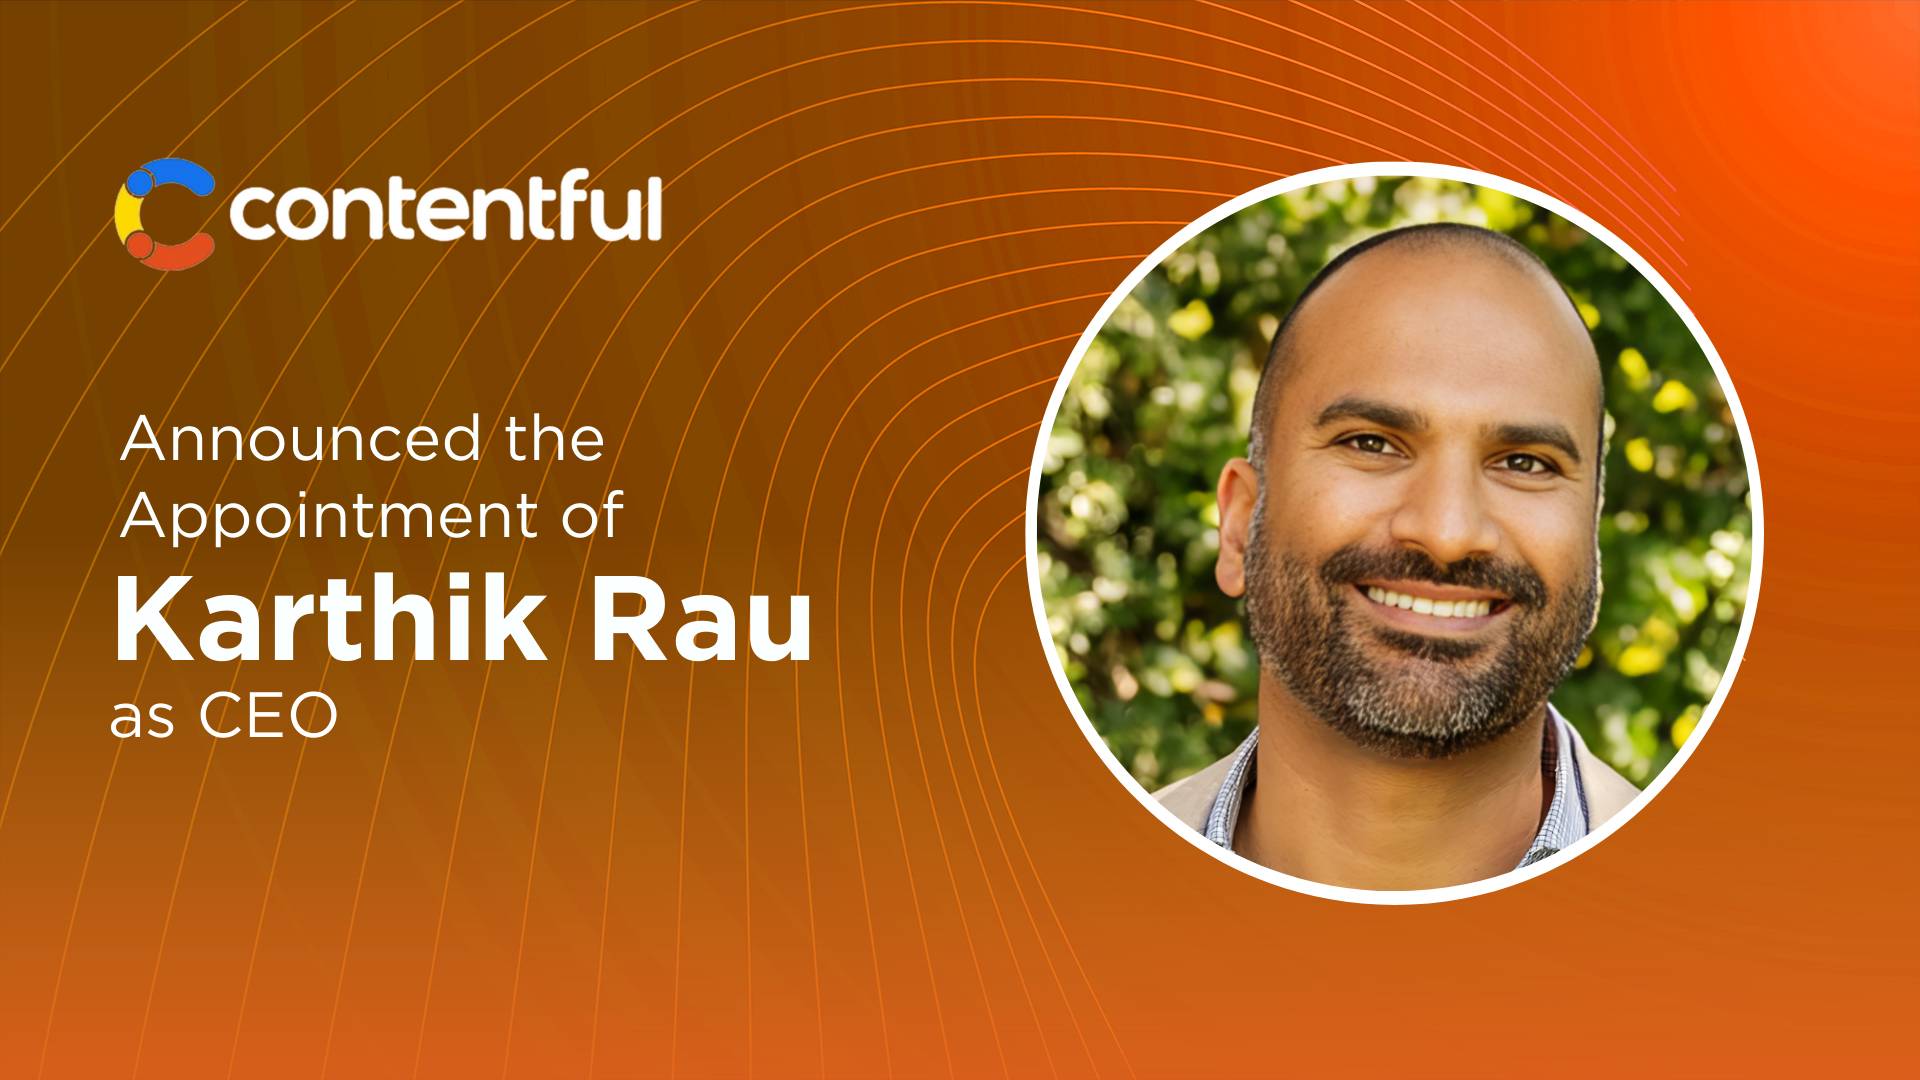 Contentful Welcomes Karthik Rau as New CEO, Succeeding Steve Sloan